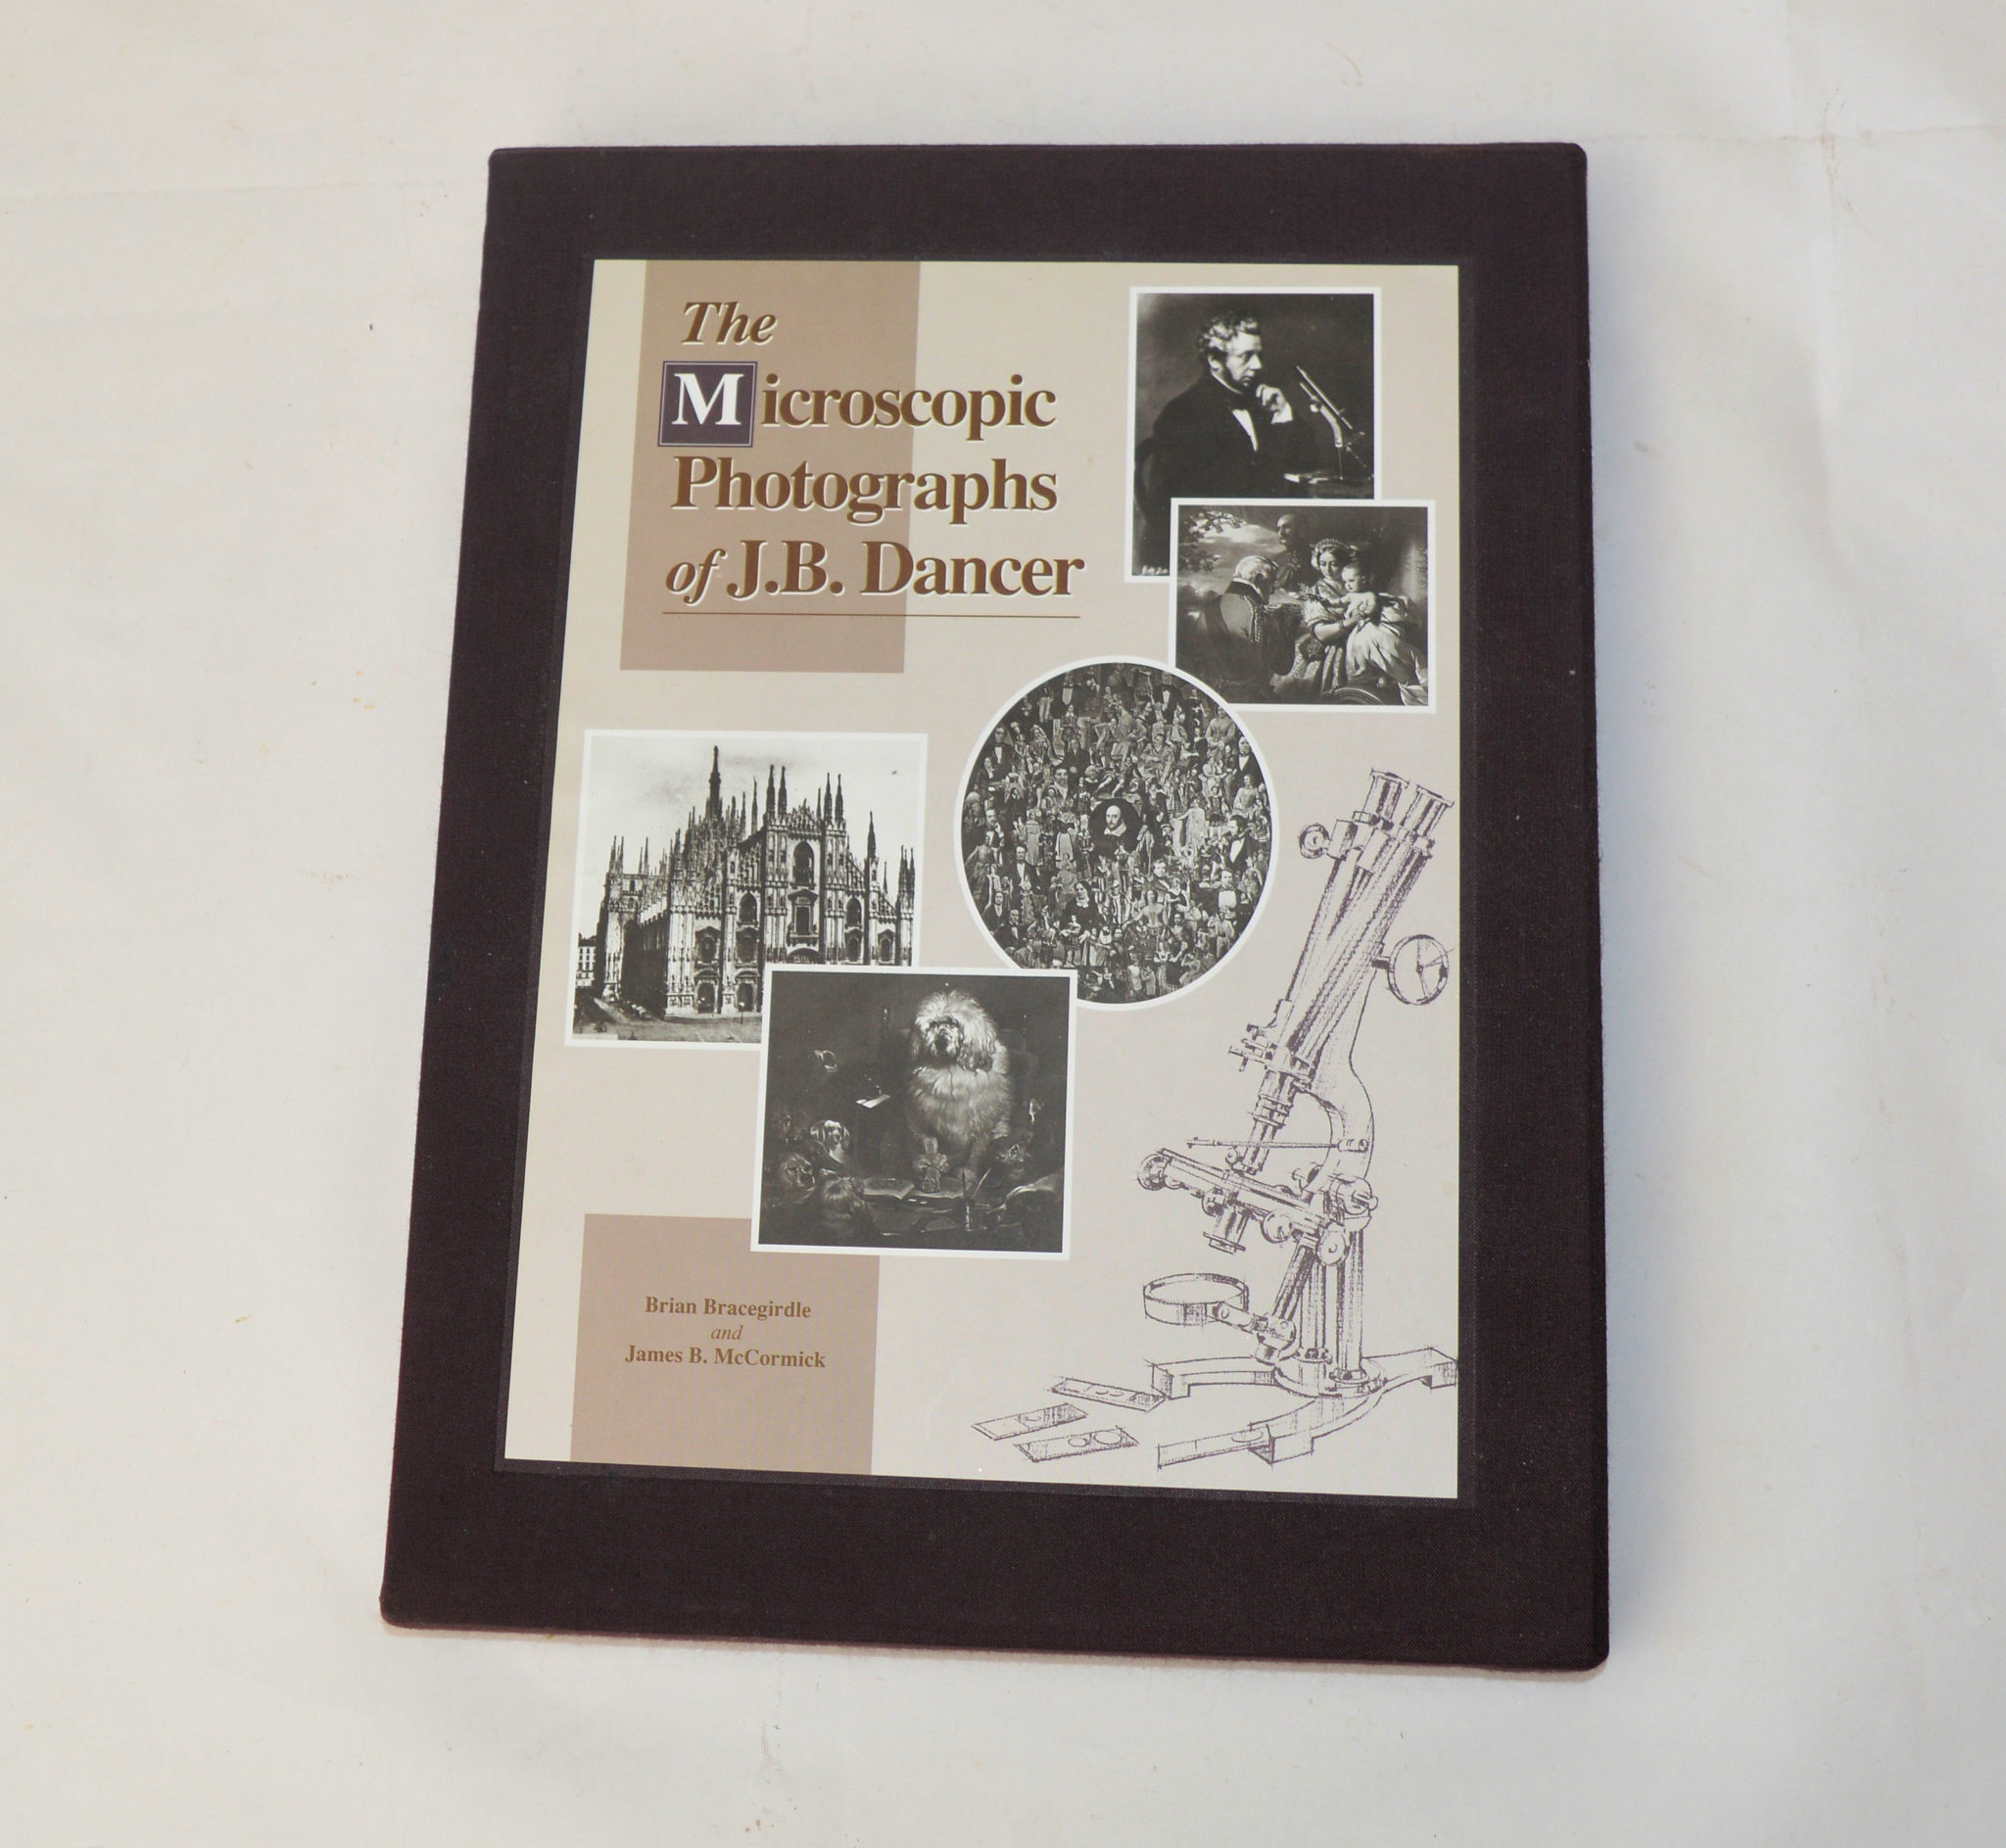 Book: The Microscopic Photographs of Benjamin Dancer.